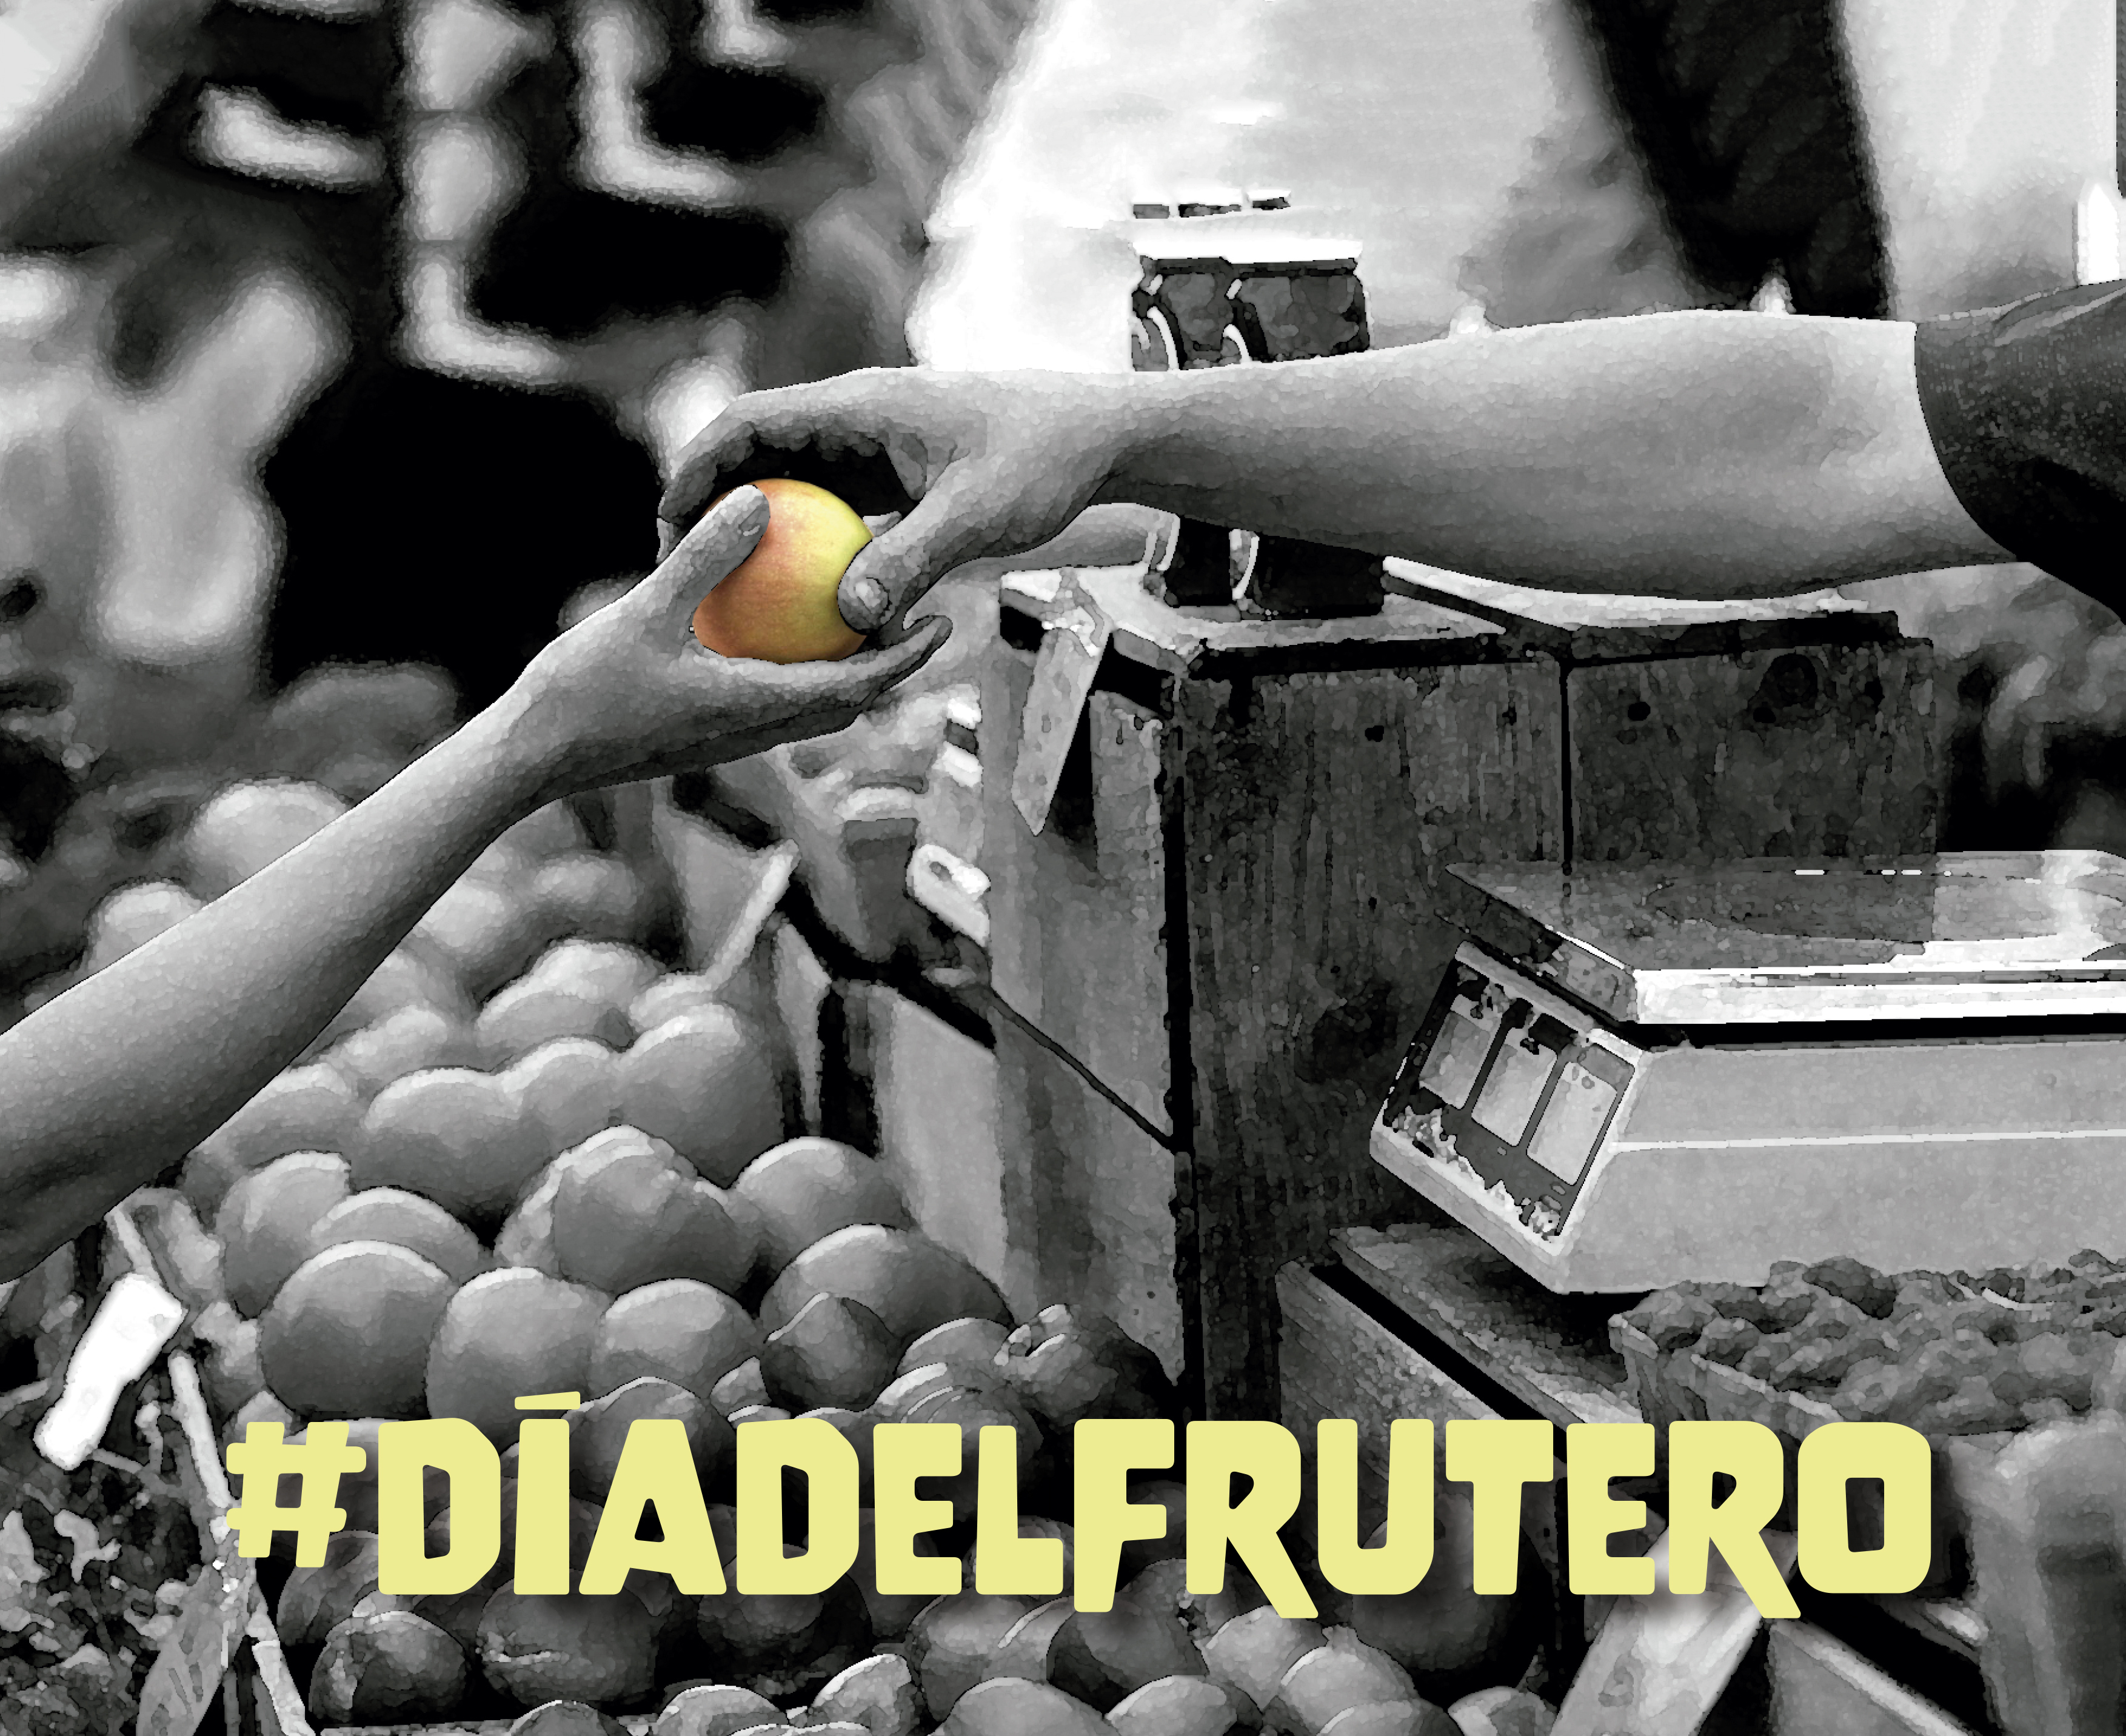 dia-frutero-cartel-5aldia